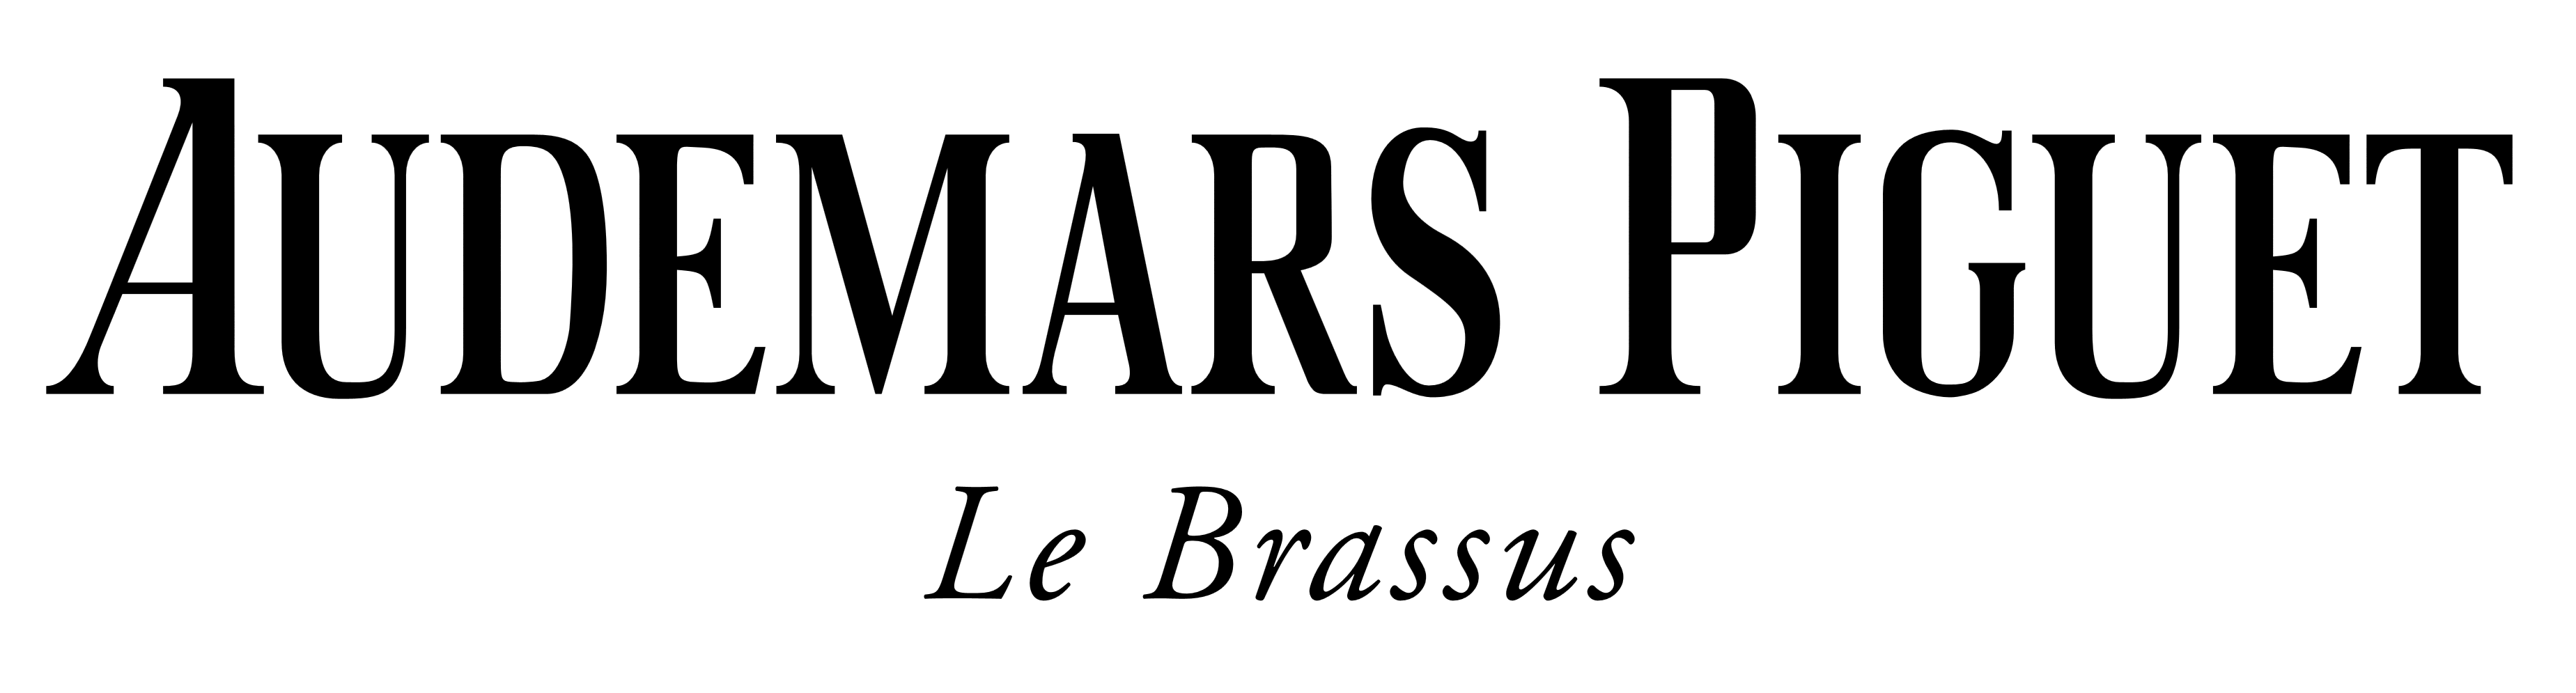 Audemars Piguet logo, logotype